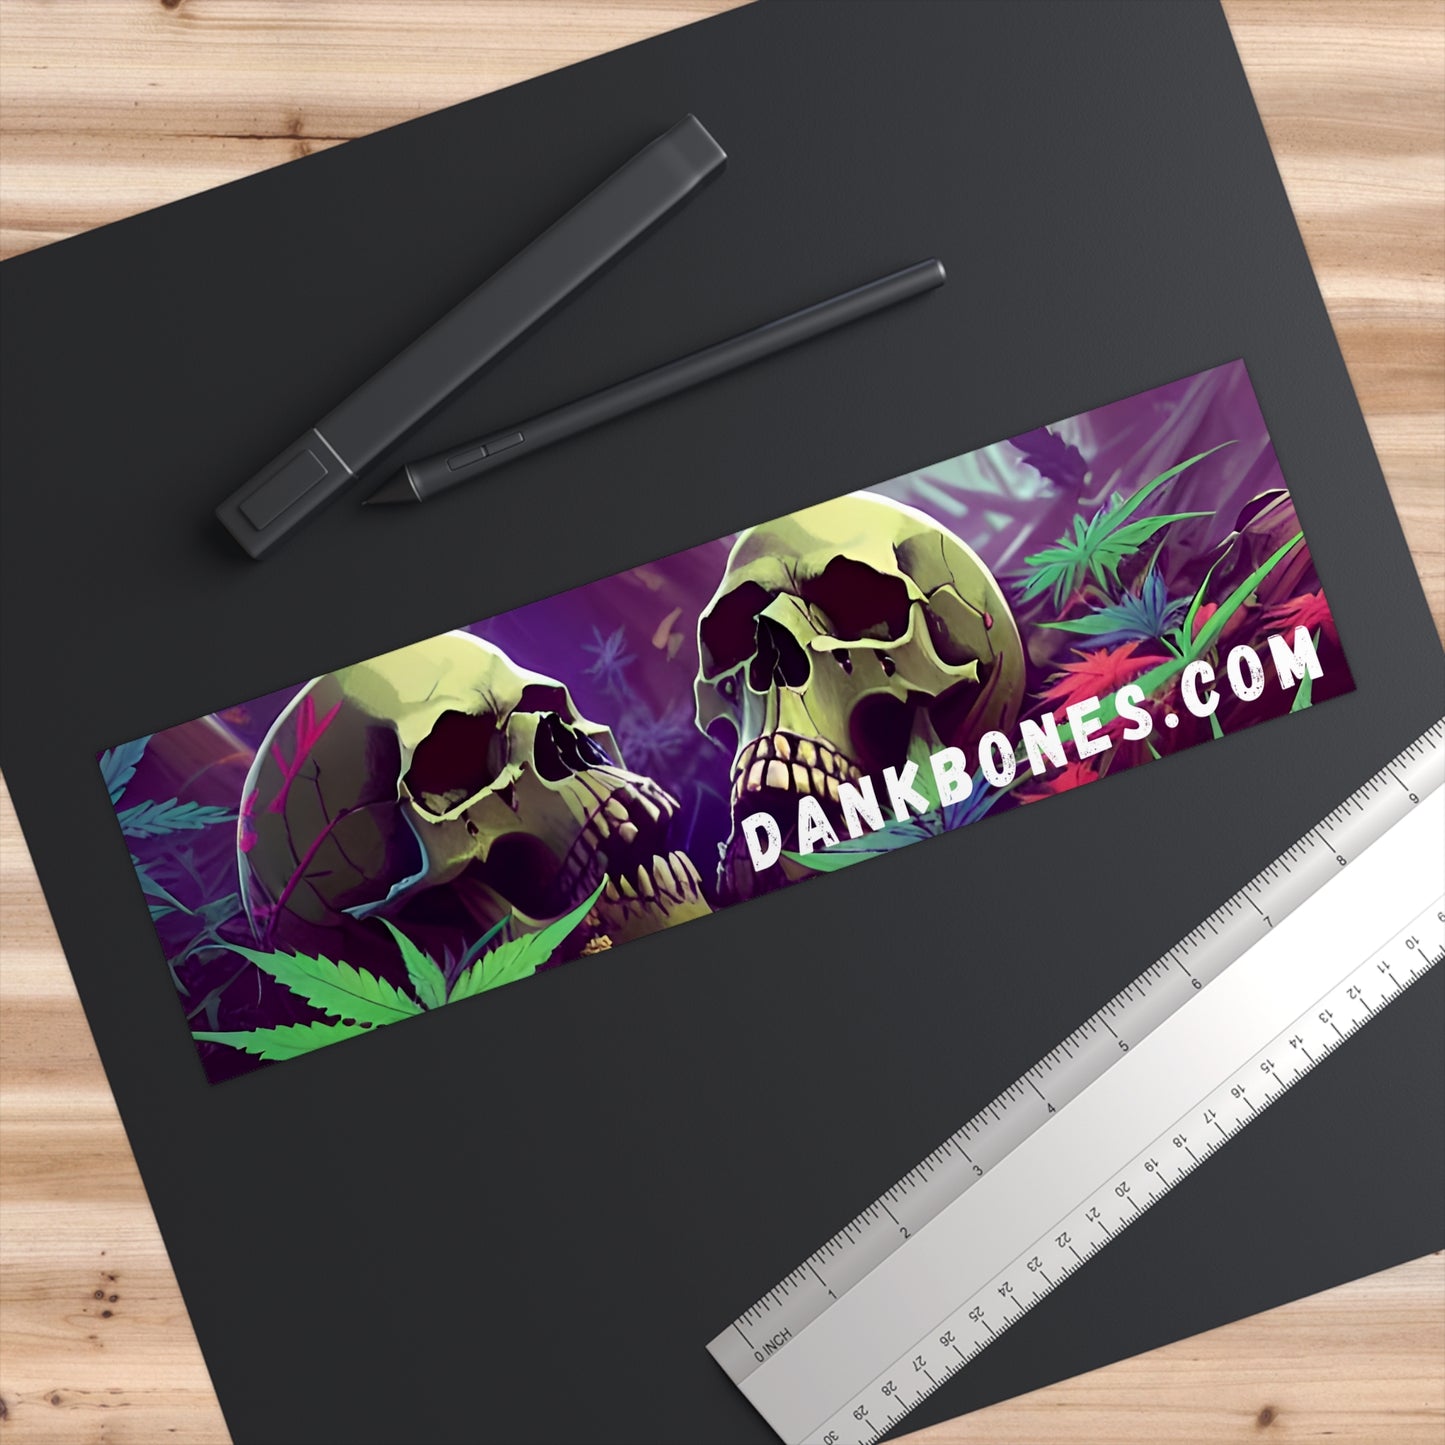 Dank Bones Bumper Sticker No. 1 - Show Off Your Love for the Cannabis Lifestyle!